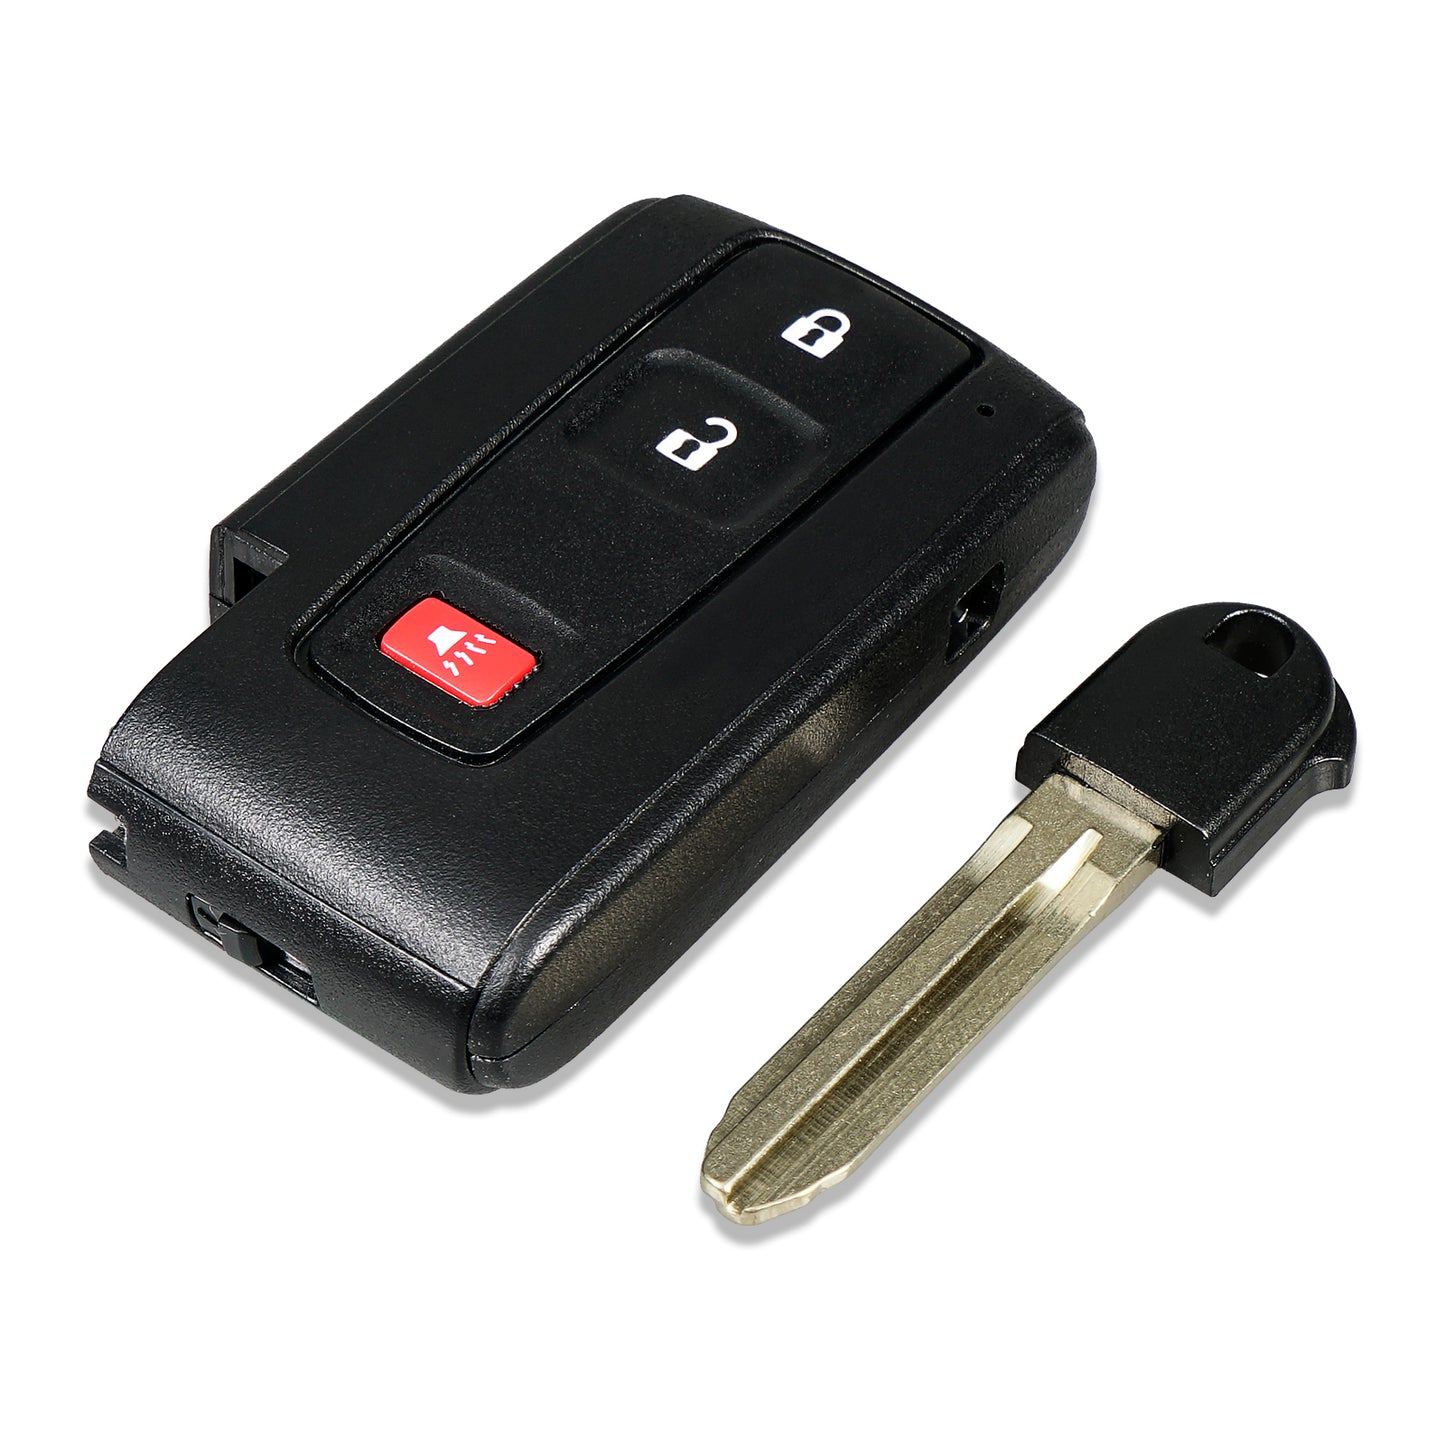 2+1 Buttons 312MHz Keyless Entry Fob Remote Car Key For 2004-2009 Toyota Prius FCC ID:MOZB21TG SKU : J716